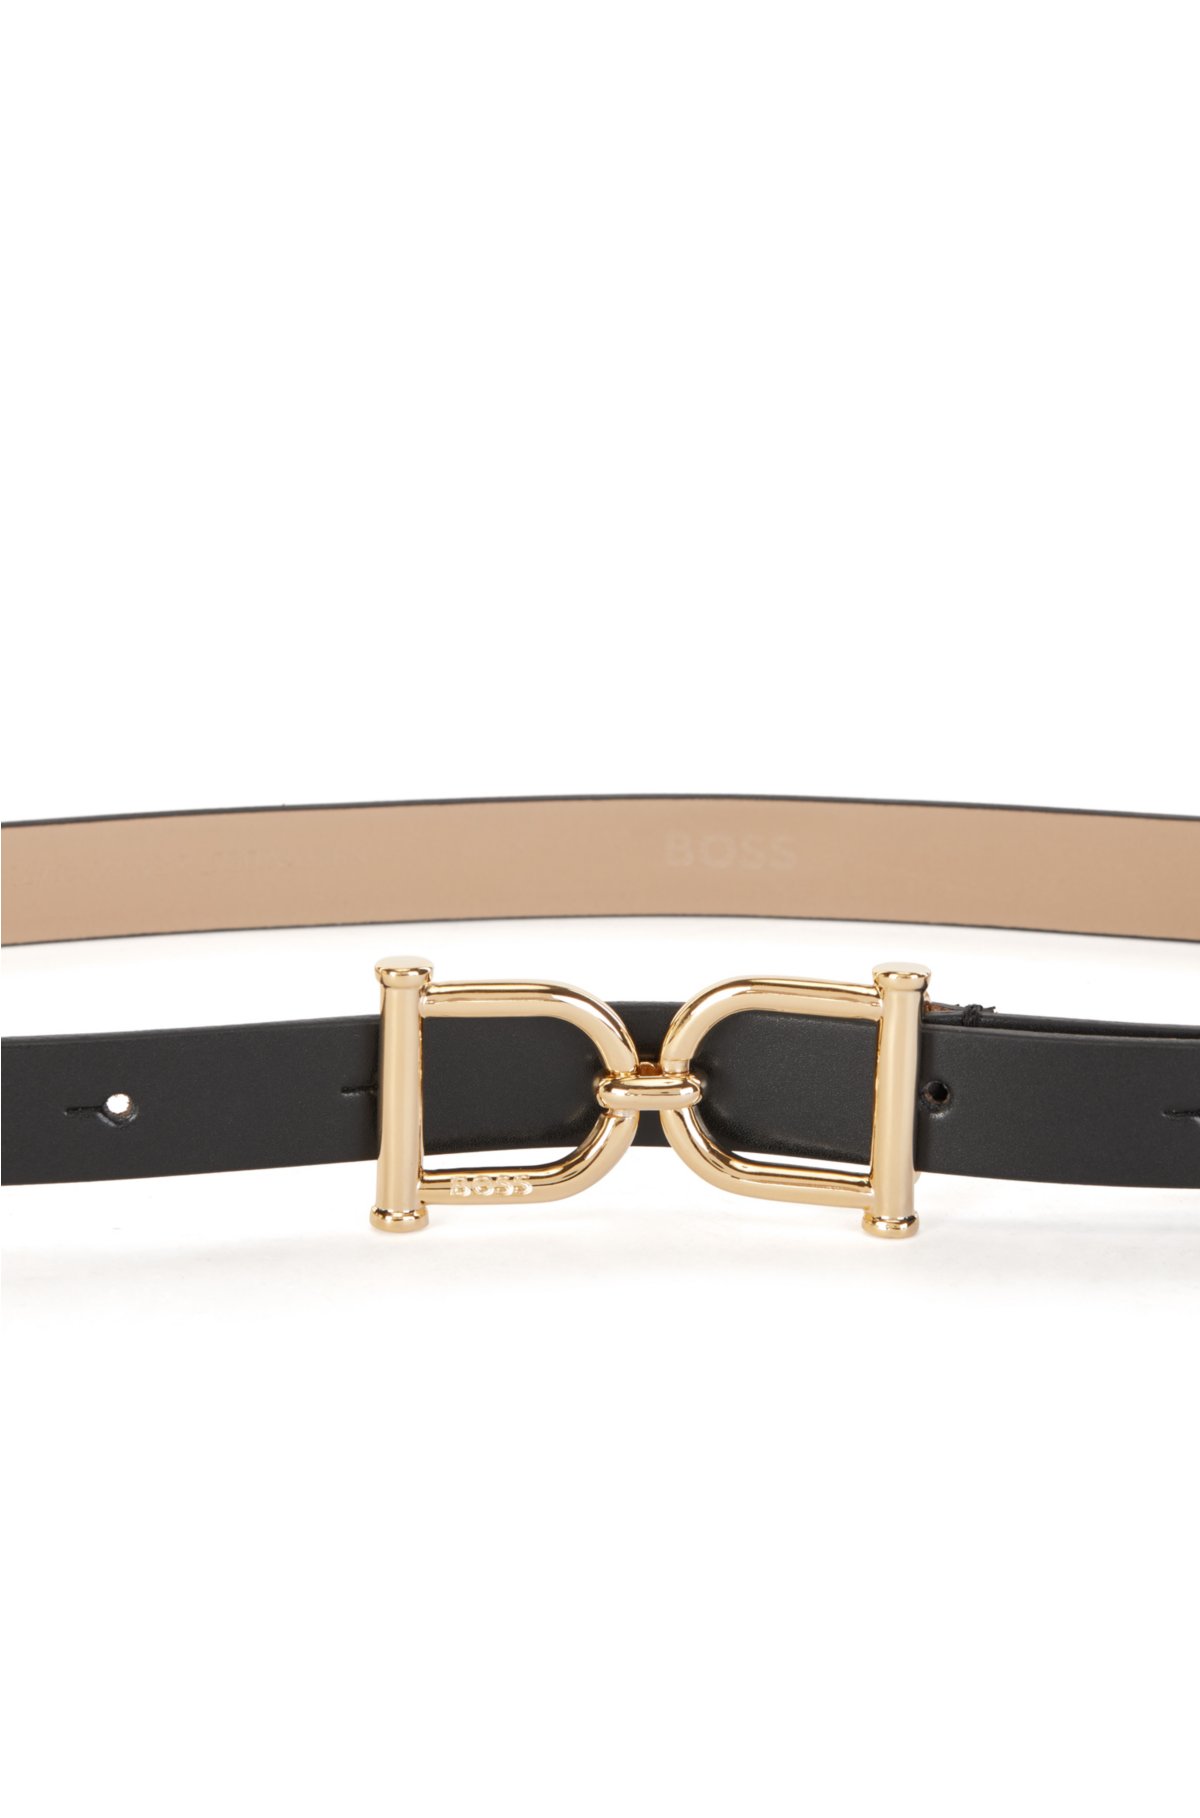 BOSS - Italian-leather belt with signature buckle